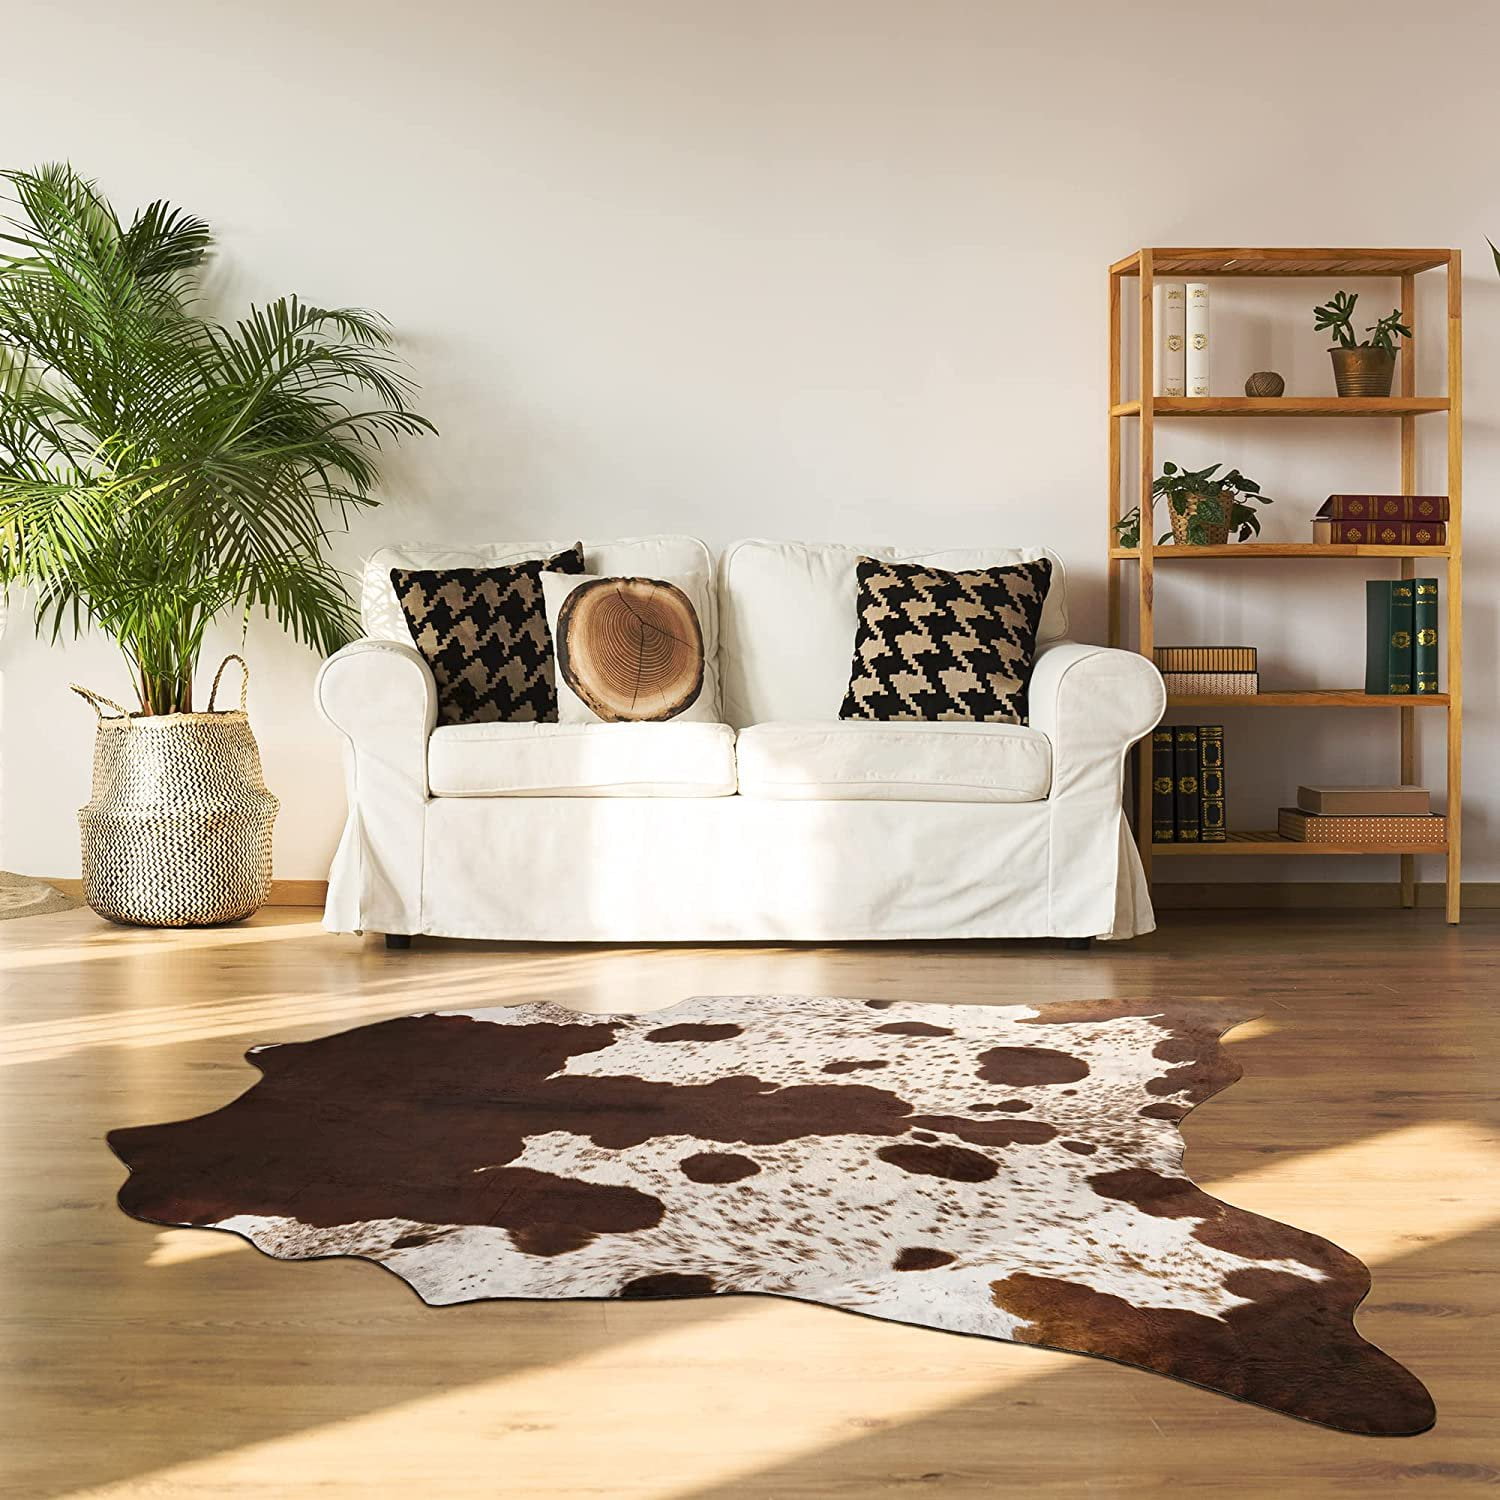 Softlife Cowhide Rug Cute Cow Print Western For Living Room Area Floor Hide Carpet Bedroom Decor Furniture 2 3 X3 6 Brown Com